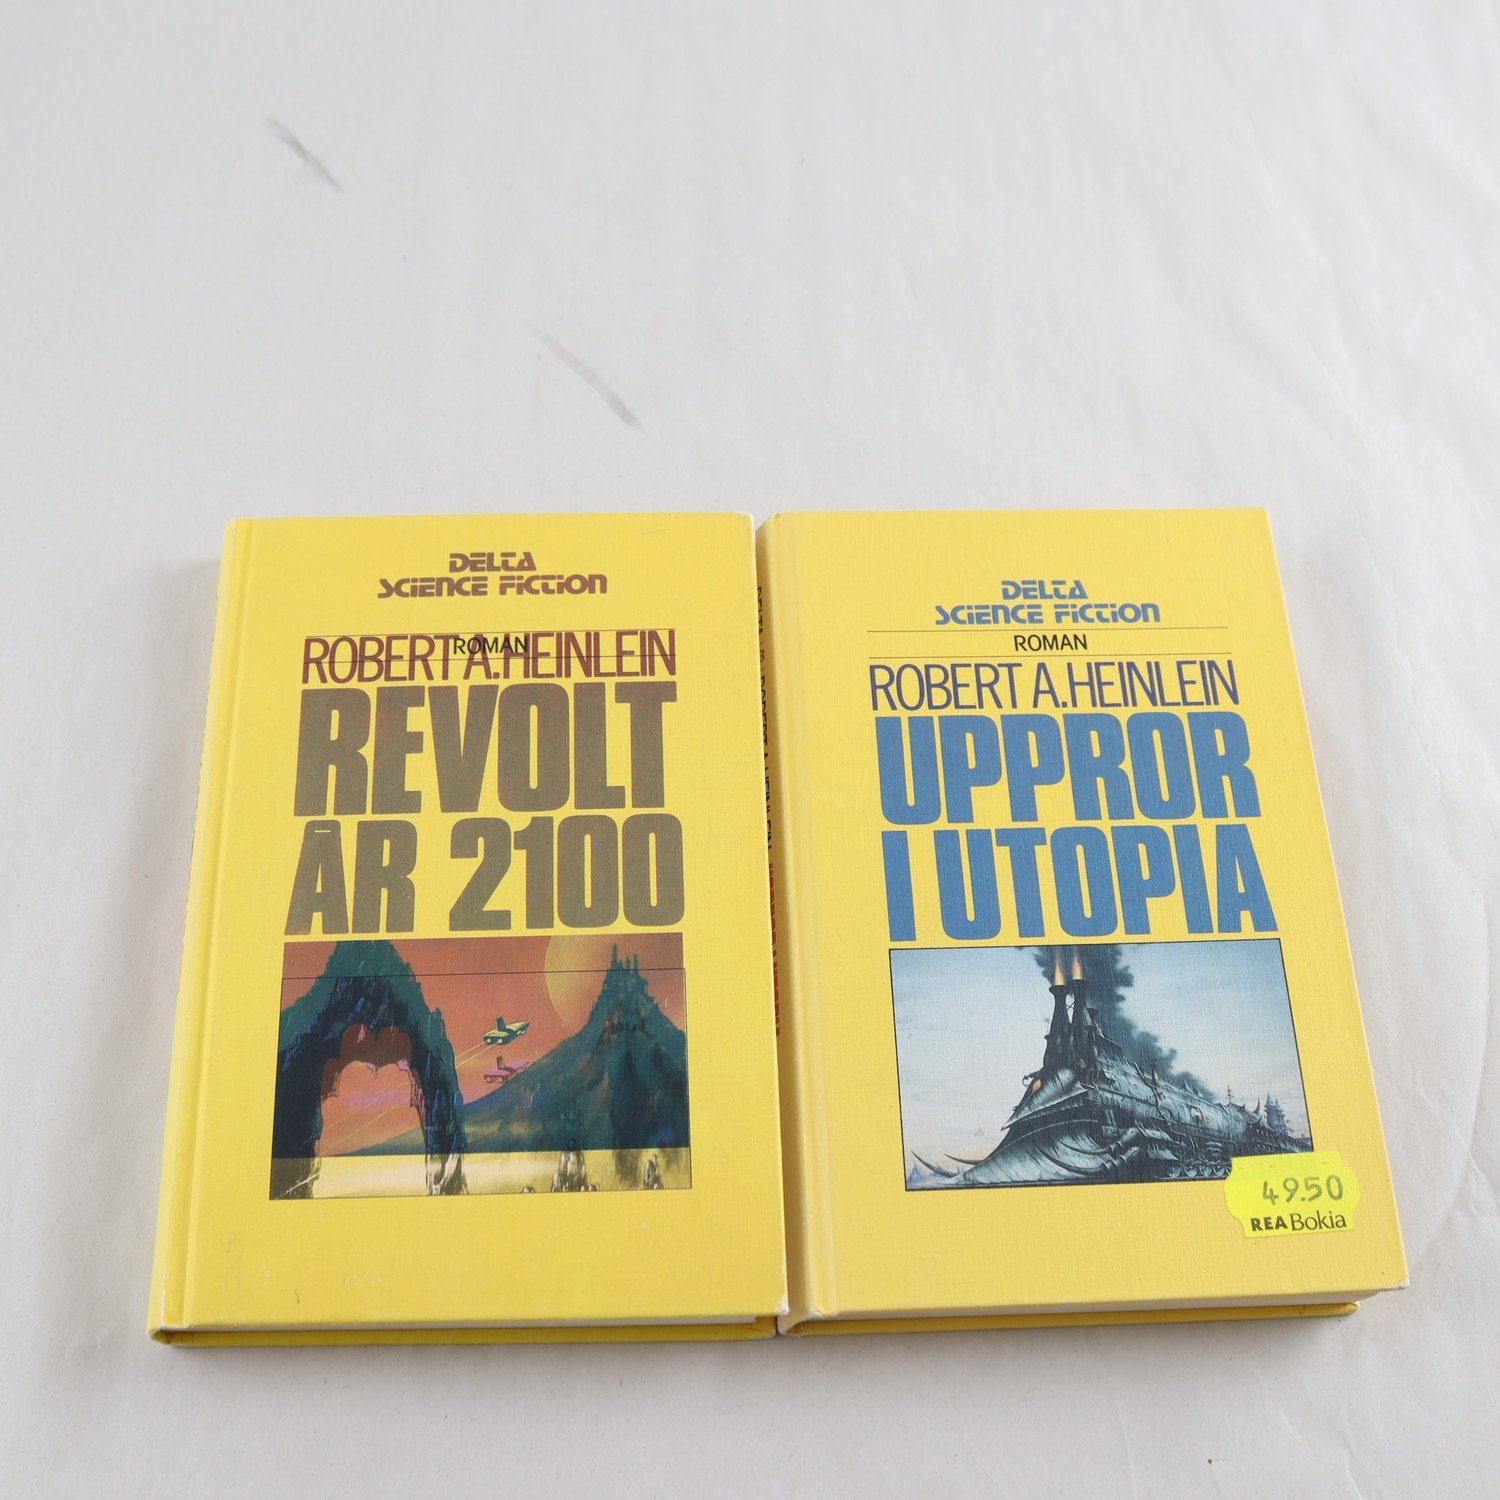 Bokpaket: Uppror i Utopia samt Revolt år 2100; Robert A. Heinlein